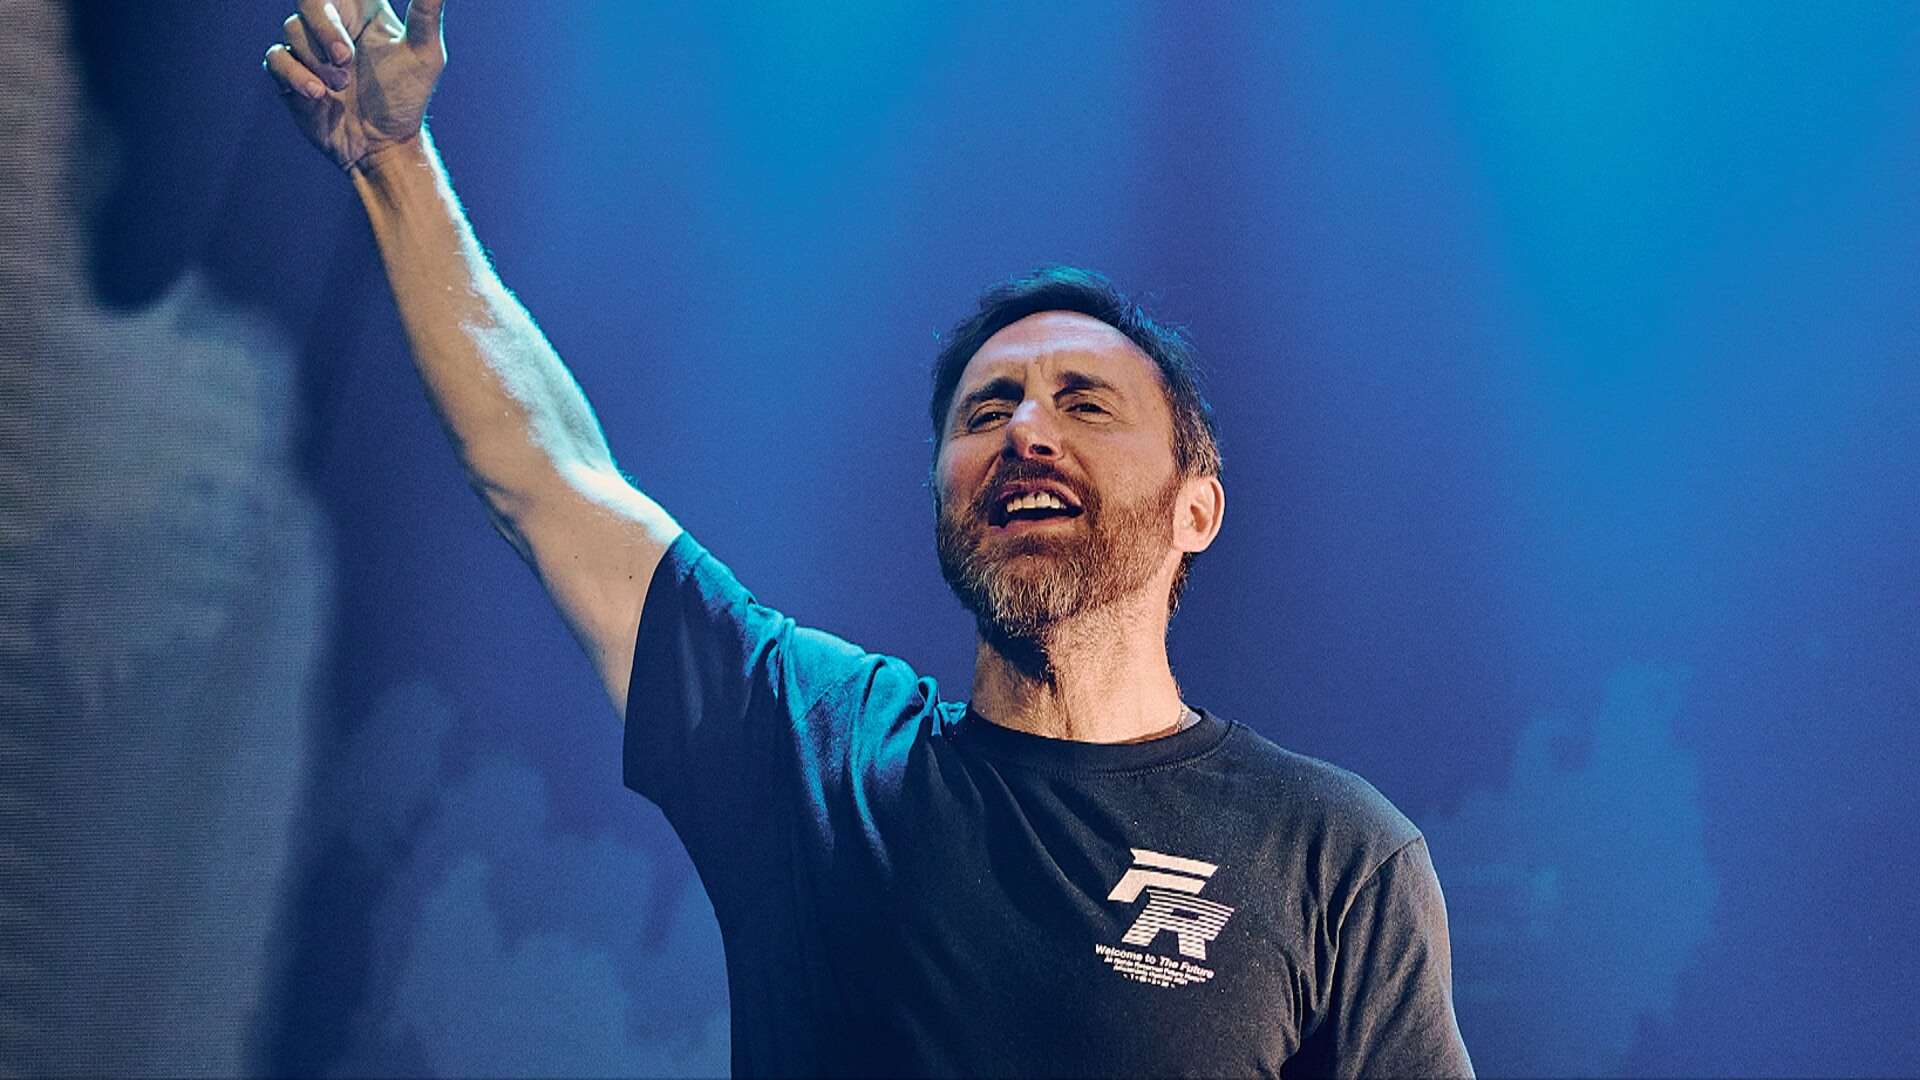 David Guetta at Hï Ibiza 2022